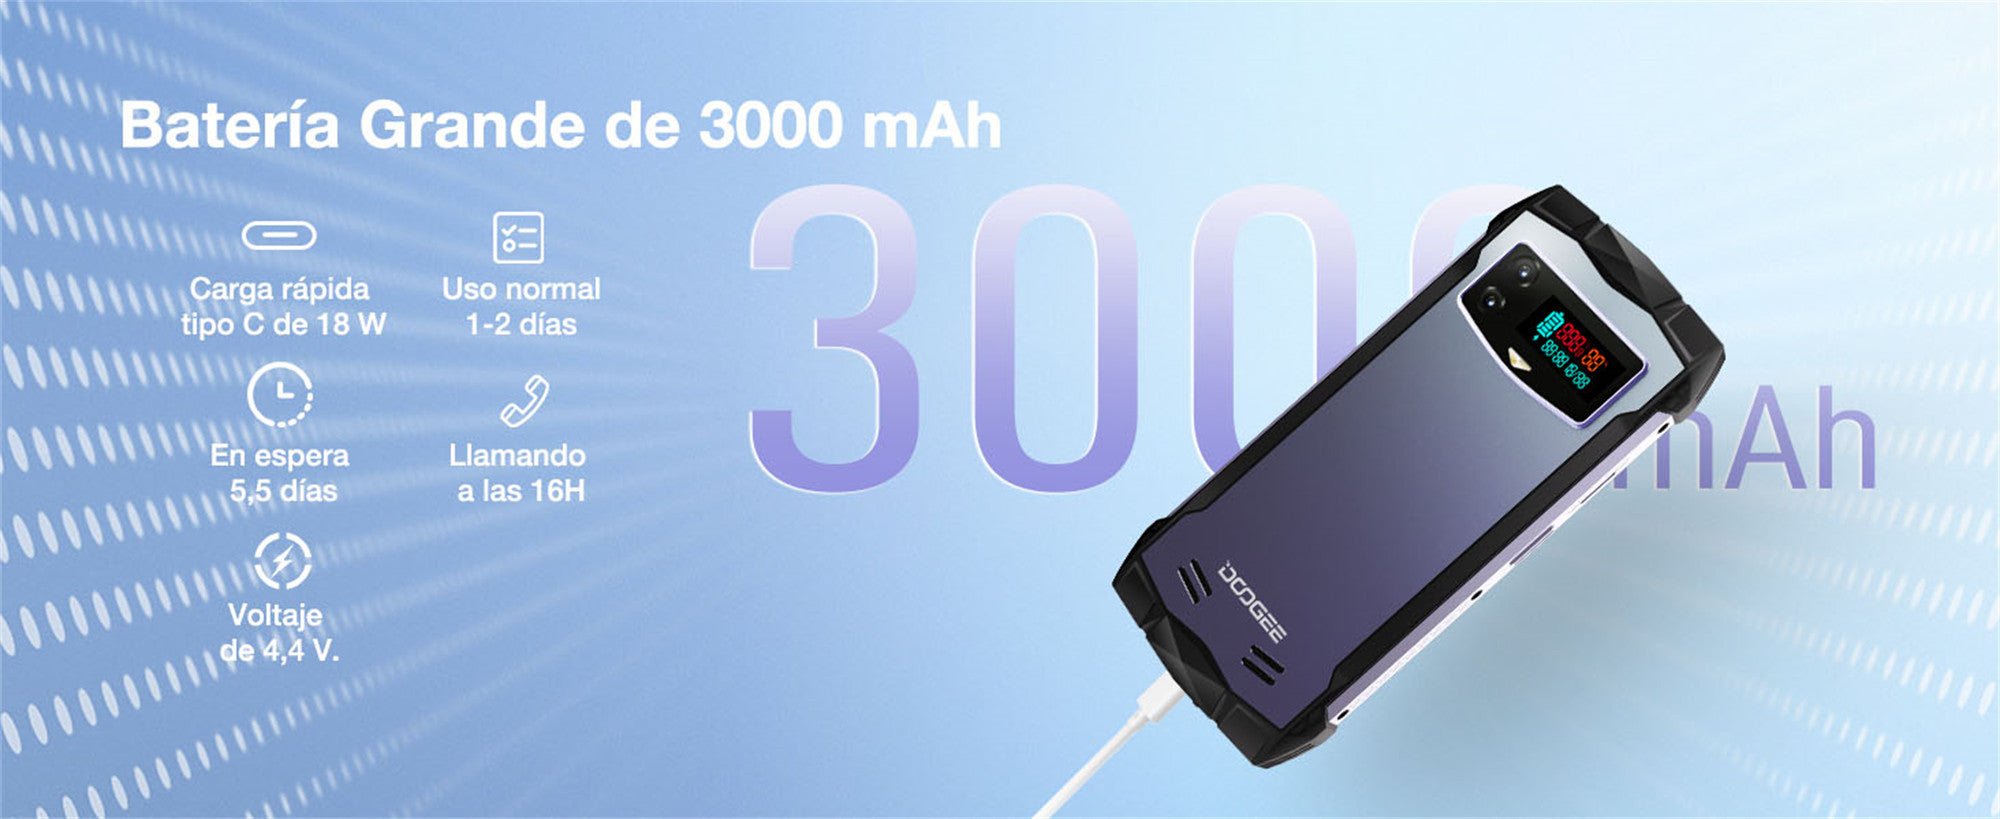 DOOGEE Smini Rugged Phone 4.5” qHD Display 8GB+256GB Innovative